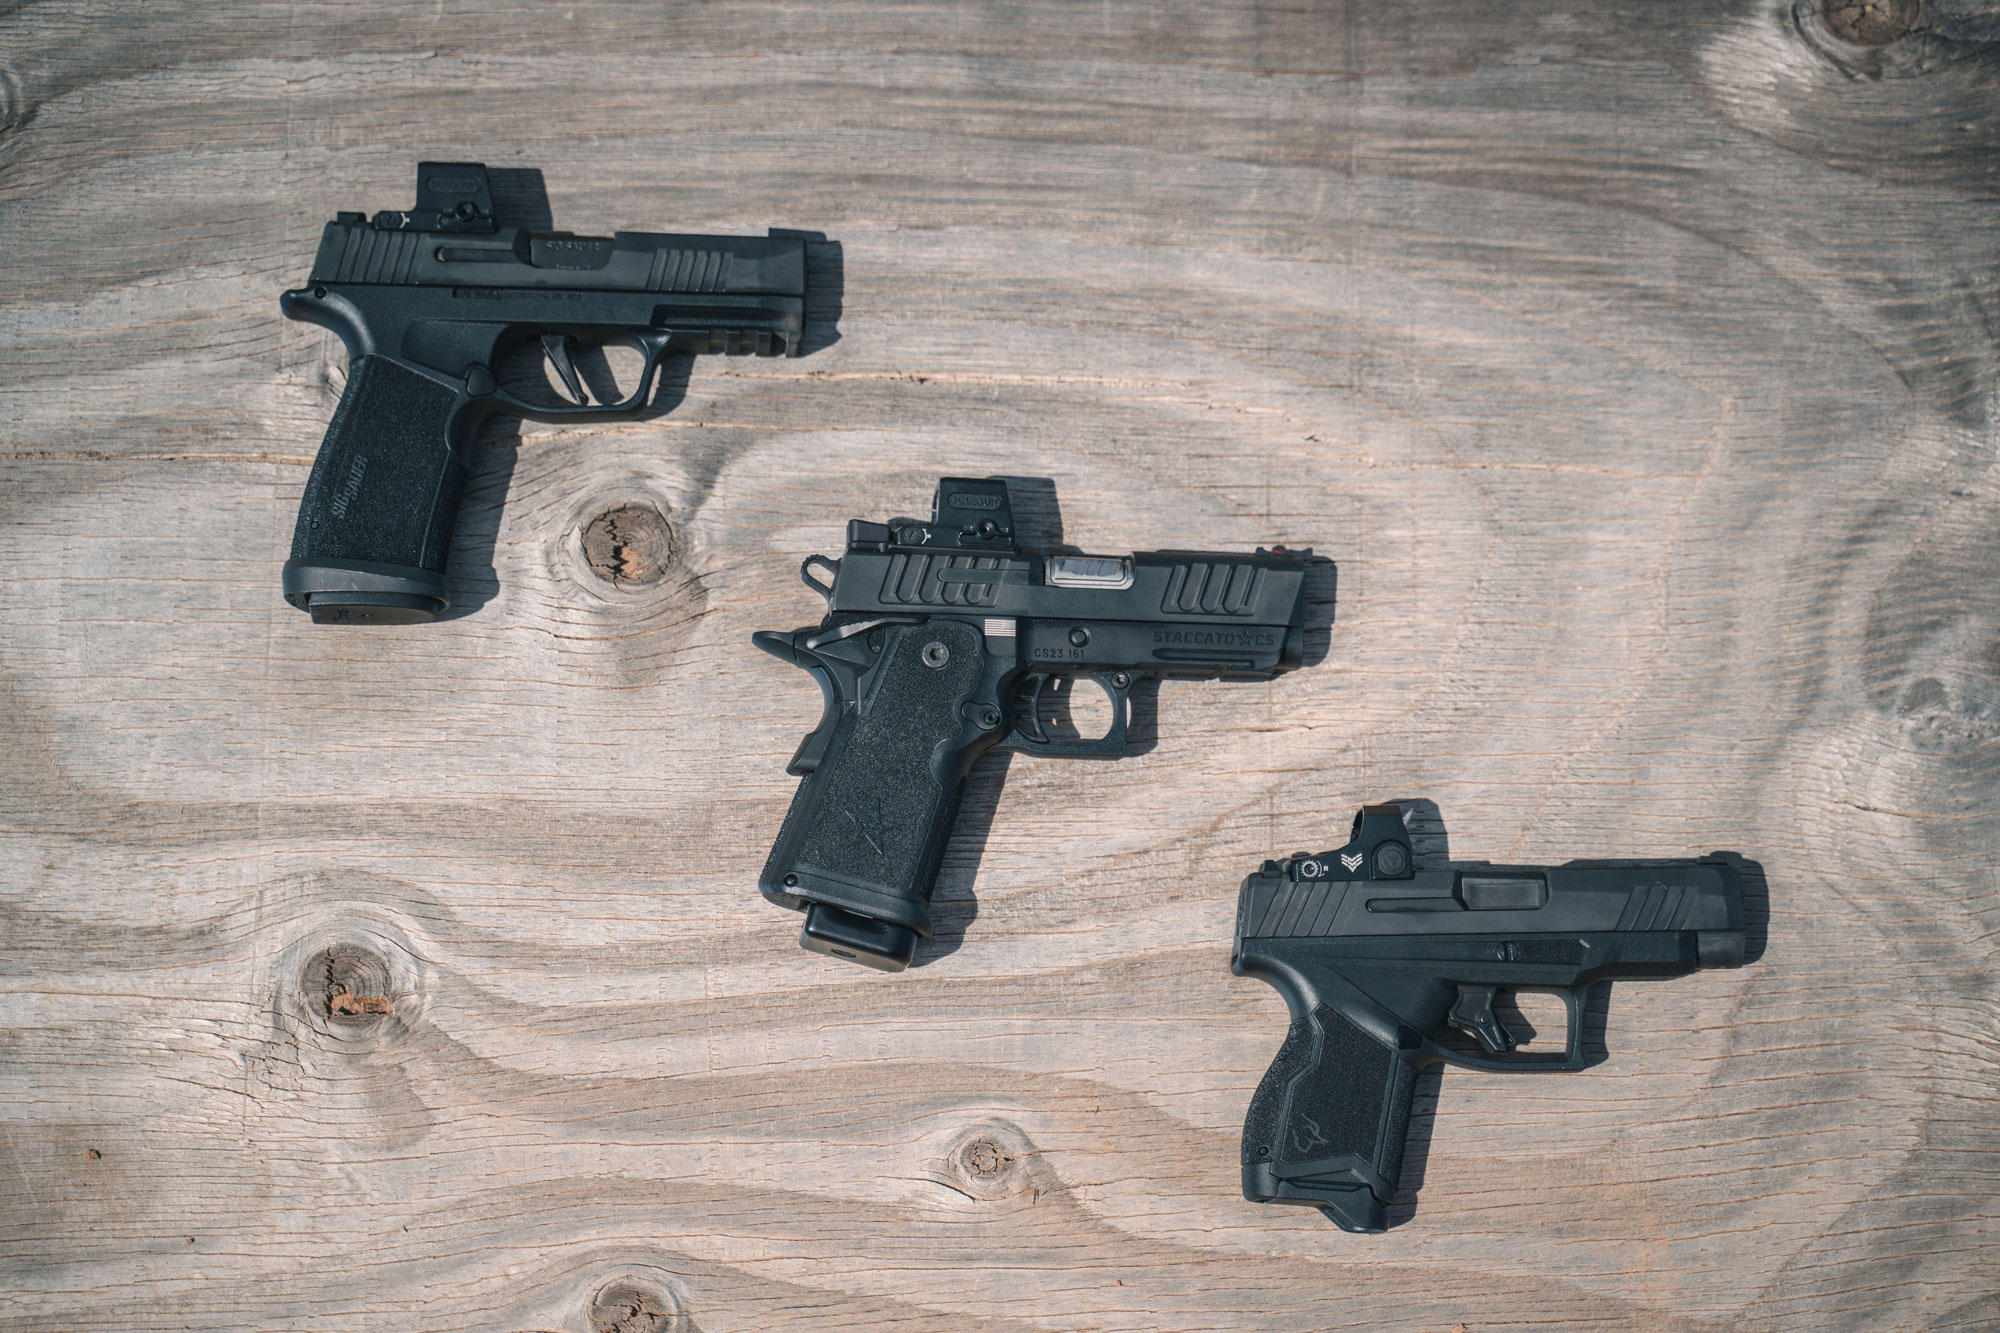 9mm compact pistols